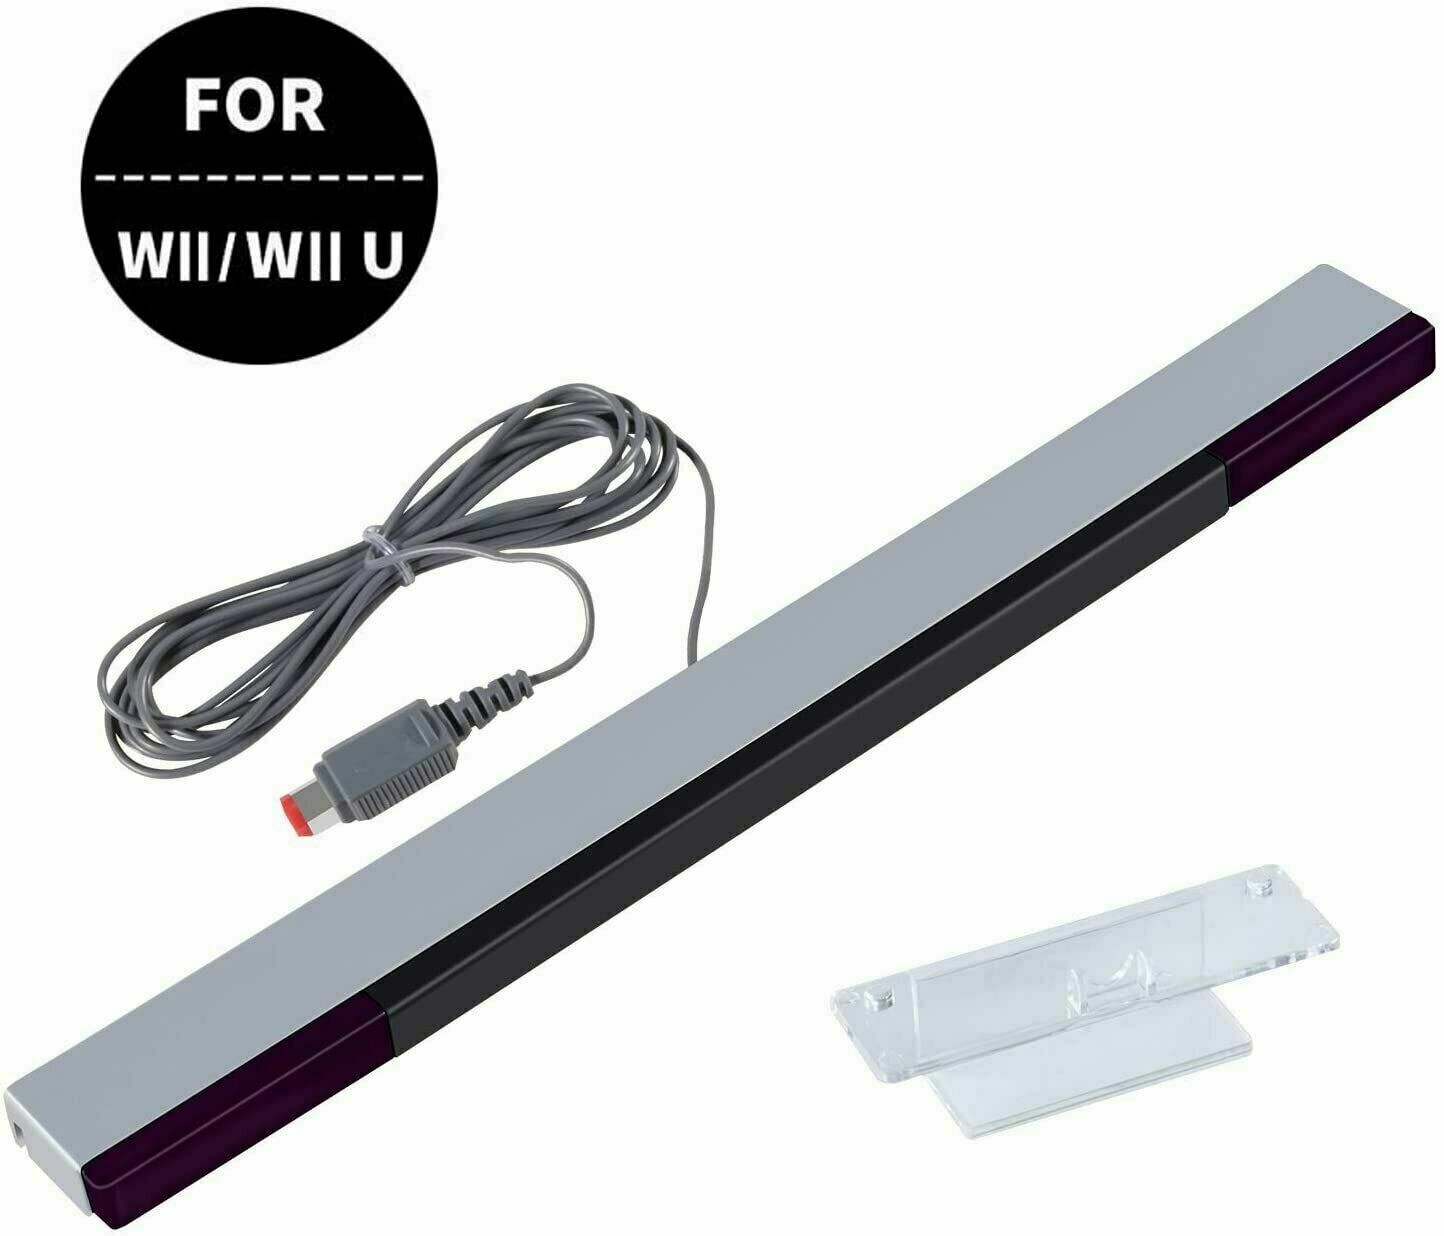 Sensor Bar For Nintendo Wii / Wii U System Infrared Ir Wired Remote Motion